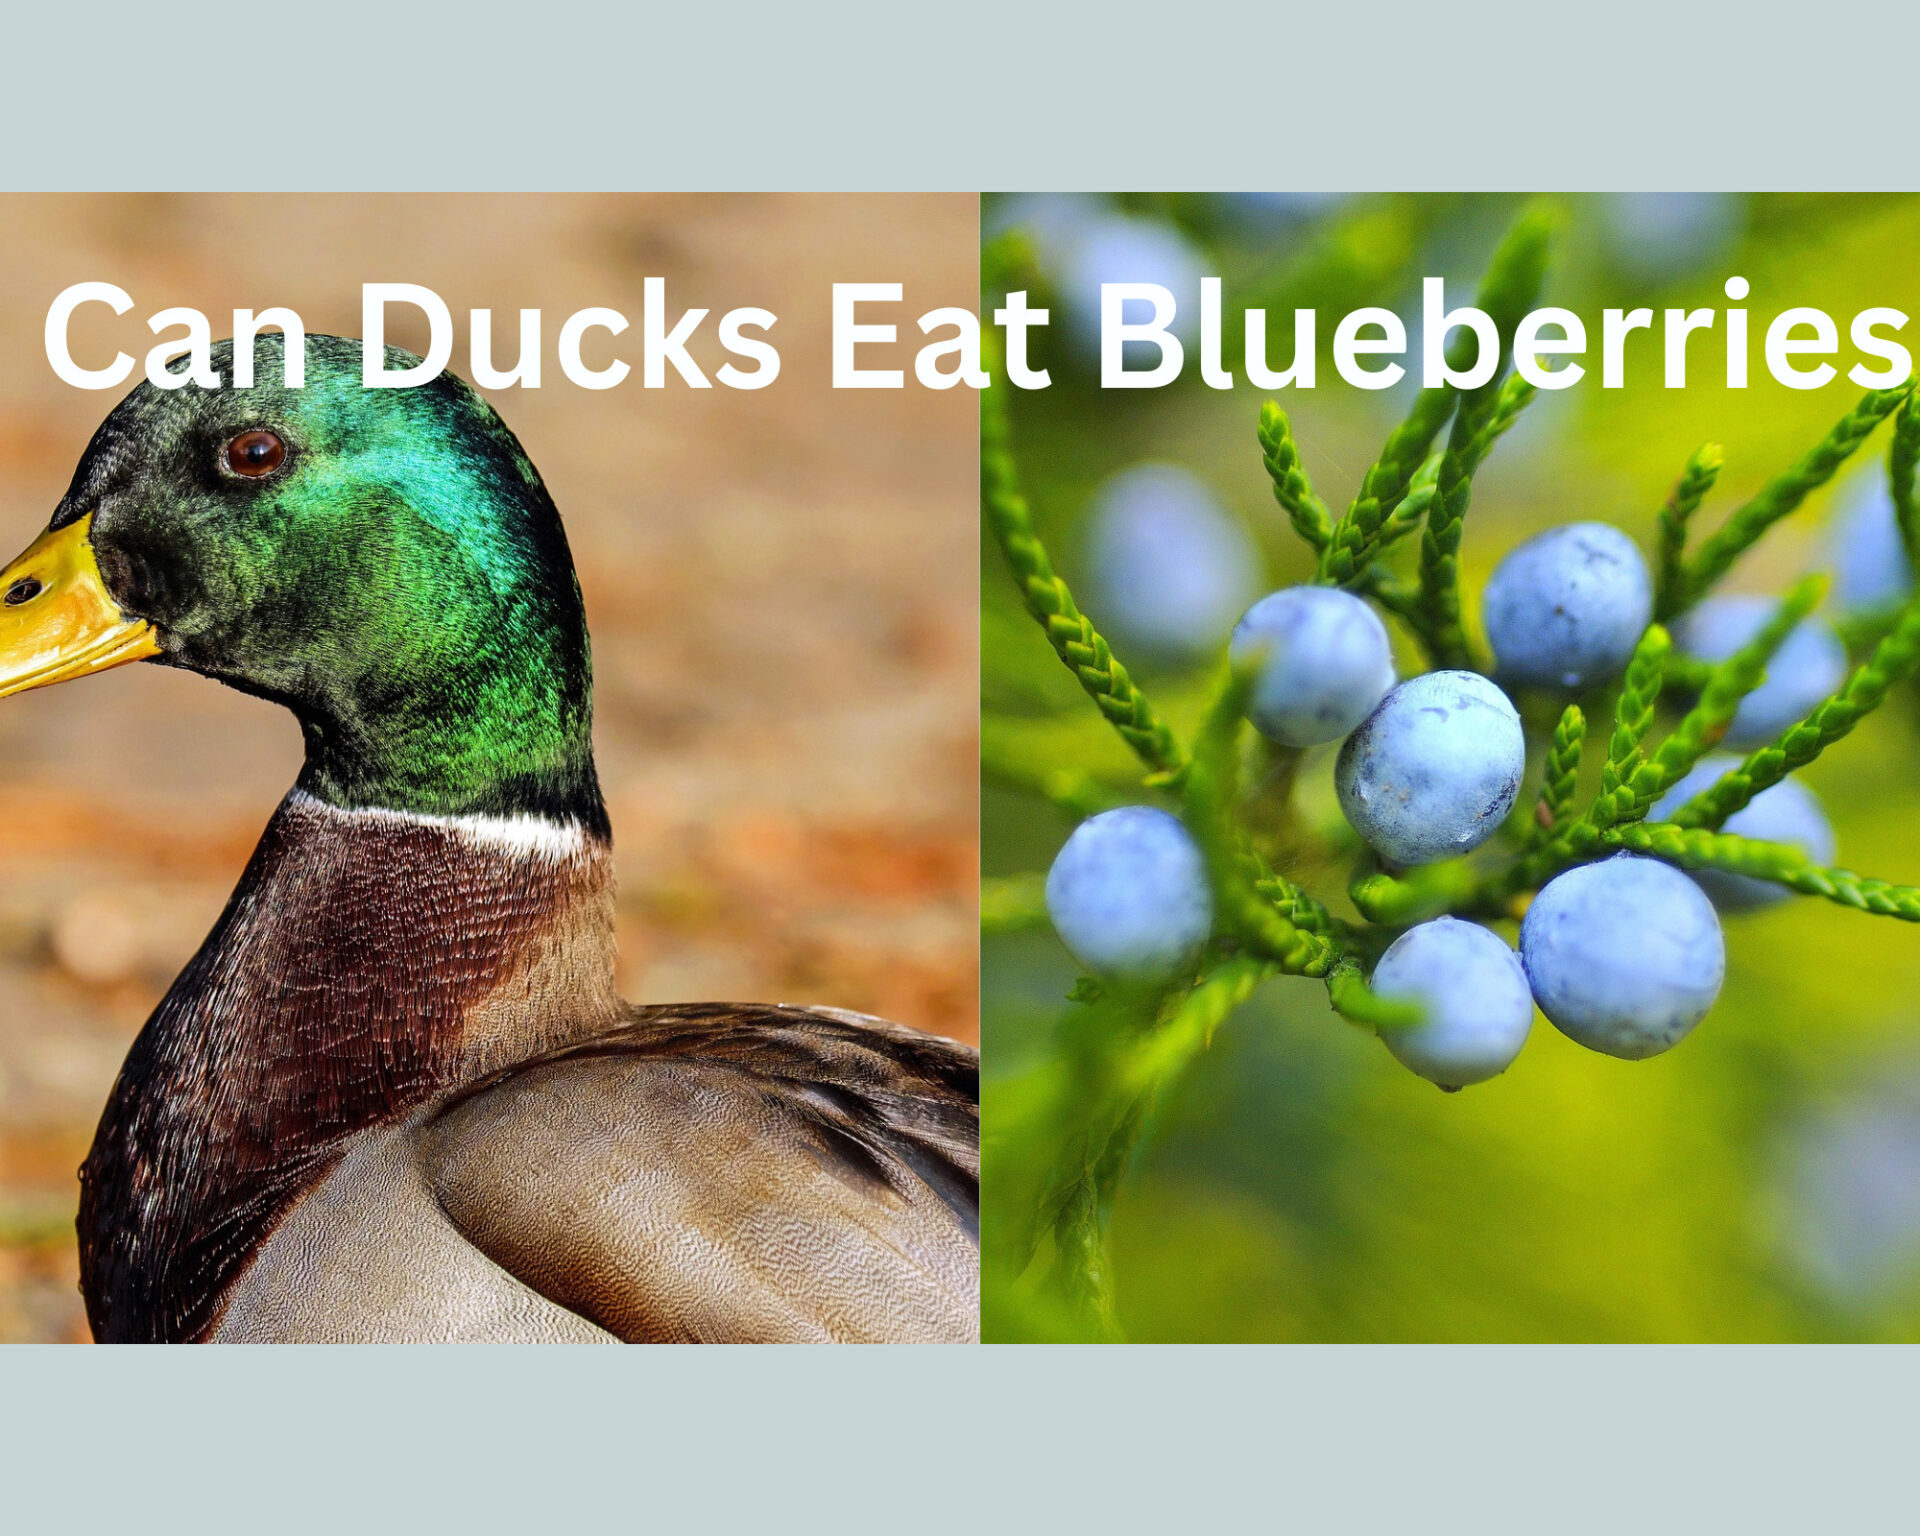 Can Ducks Eat Blueberries?